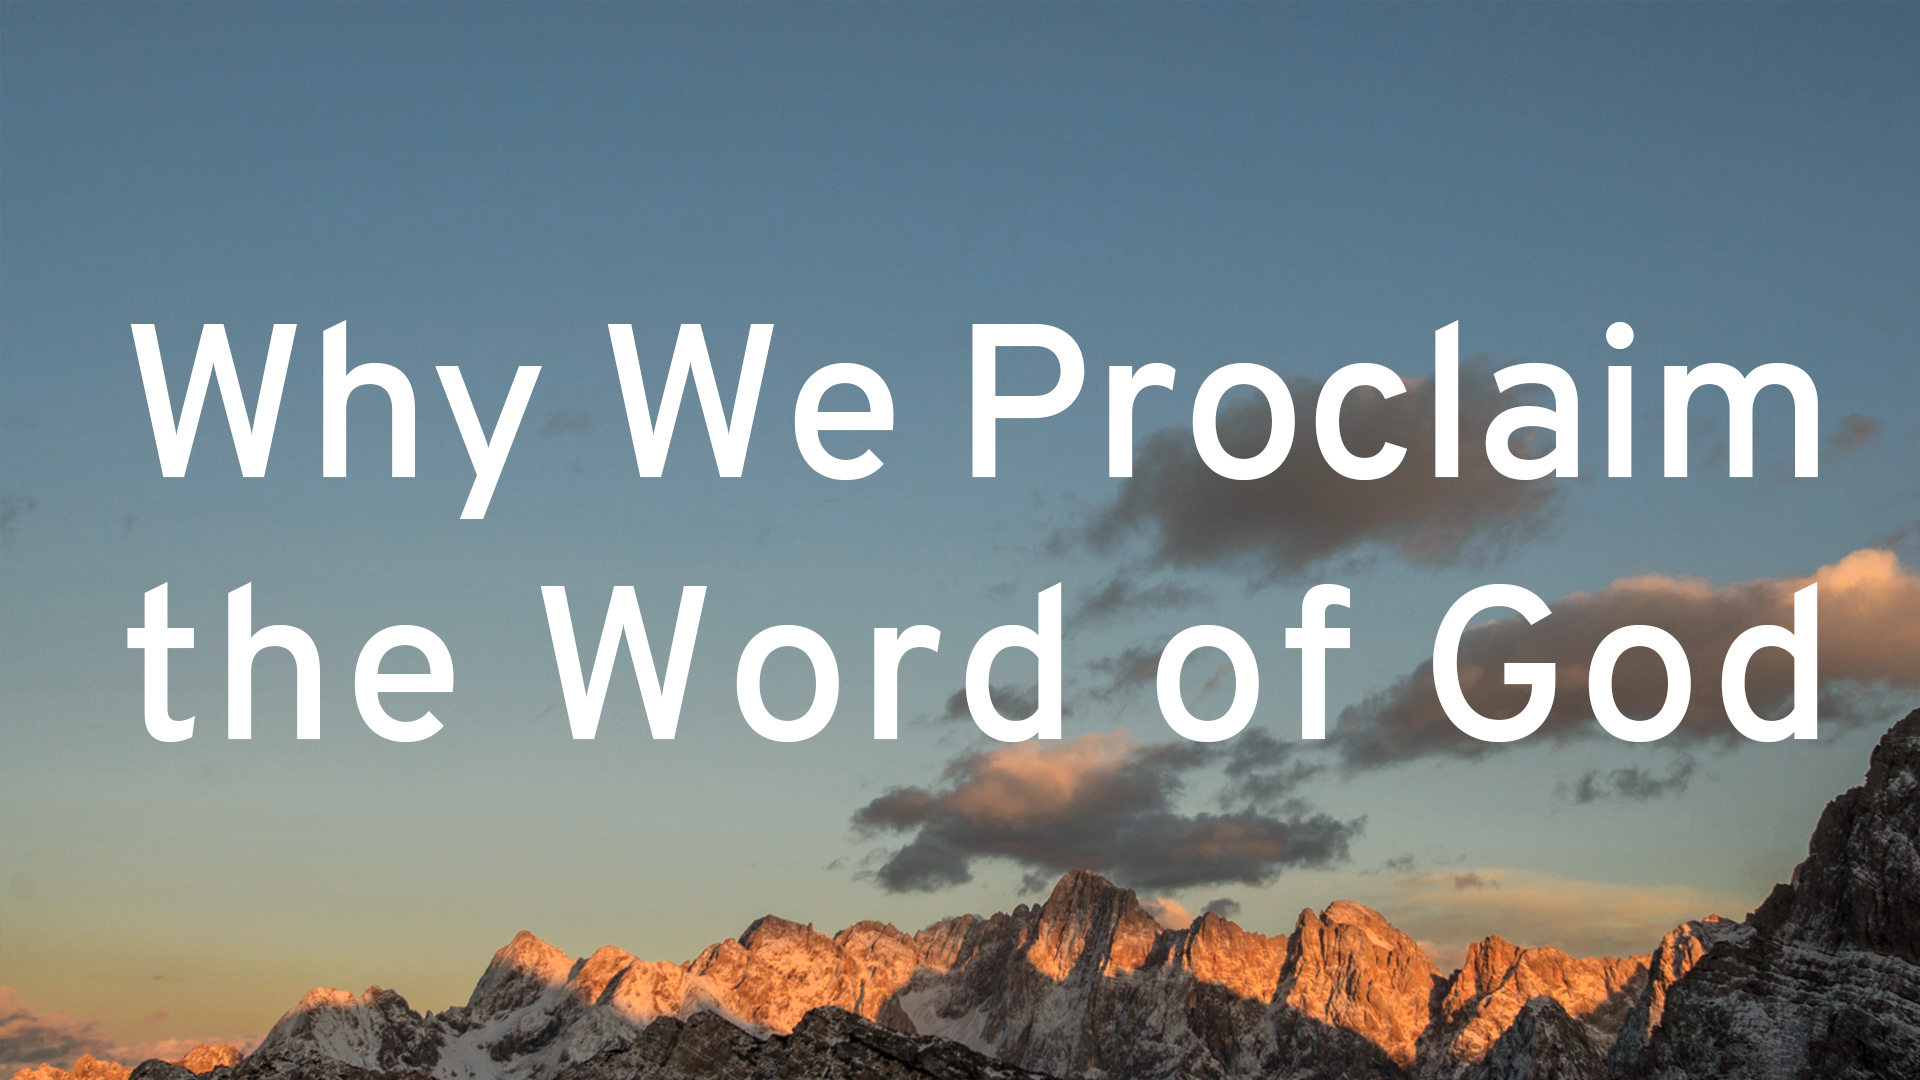 Why We Proclaim the Word of God